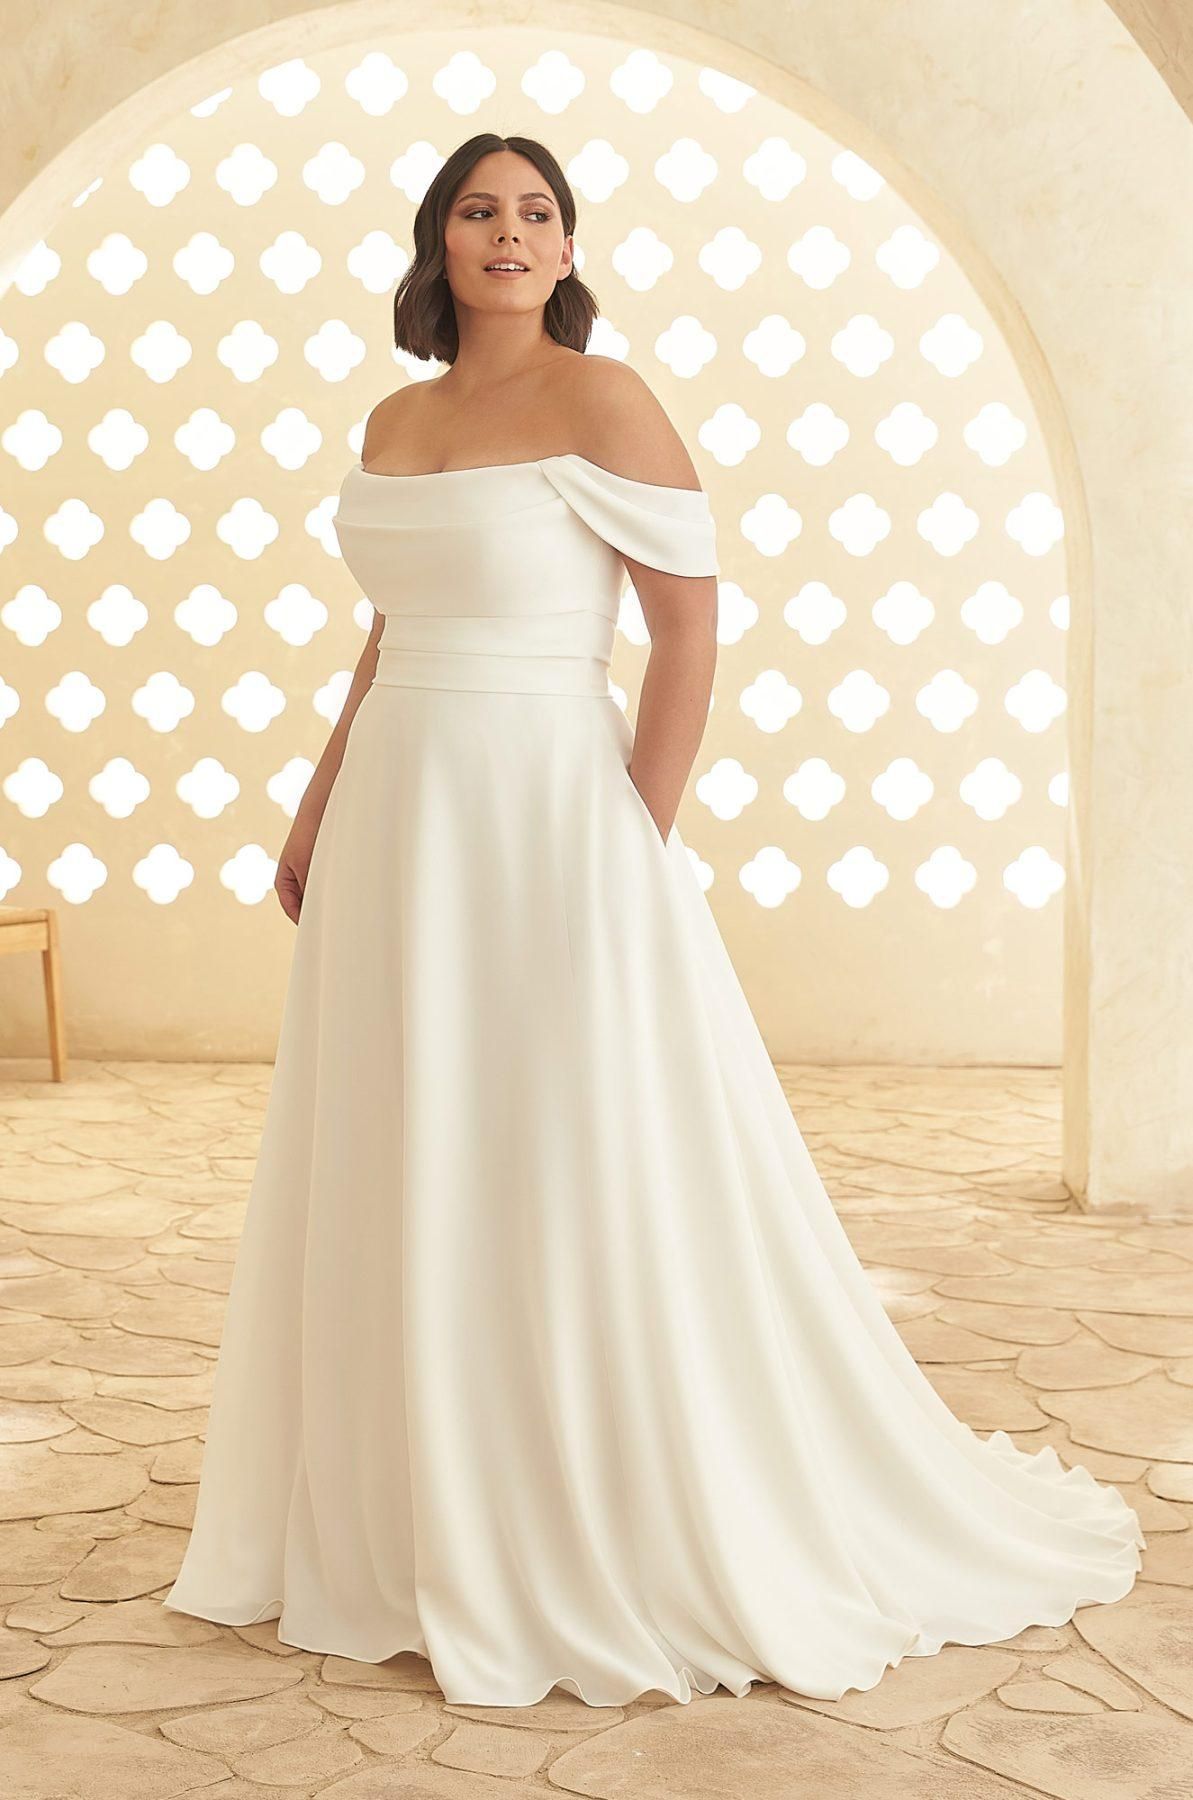 Regency Wedding Dresses: 20 Bridgerton-Inspired Gowns - hitched.co.uk